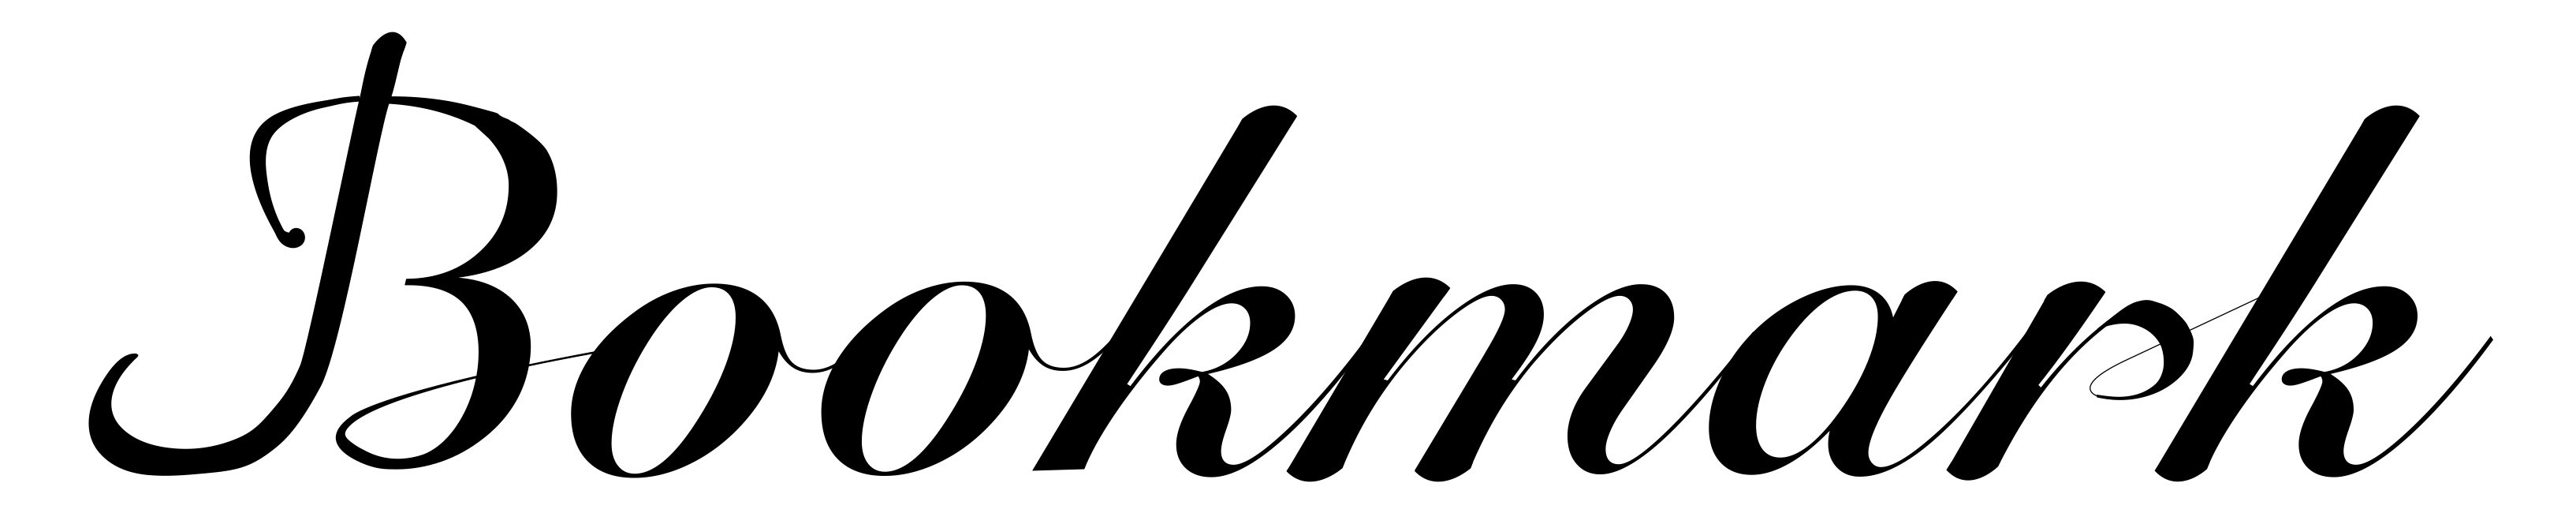 Trademark Logo BOOKMARK